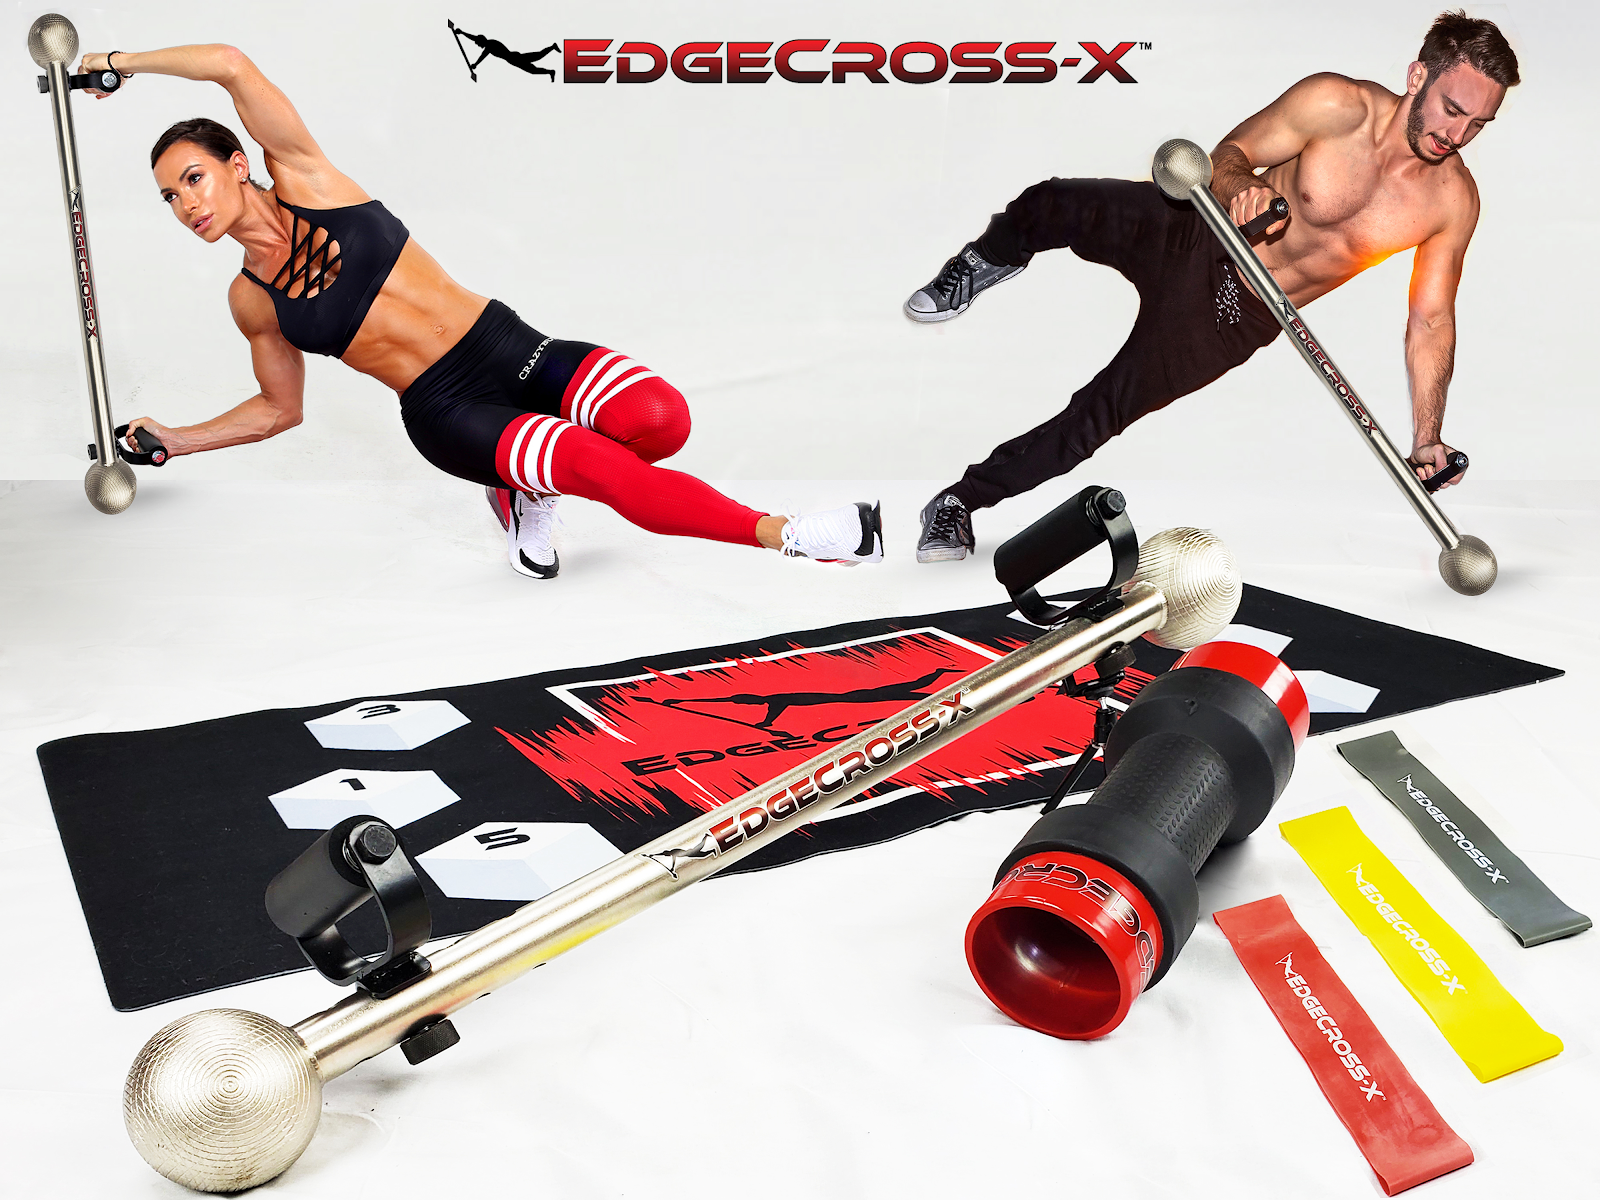 EdgeCross-X LLC., Thursday, December 24, 2020, Press release picture